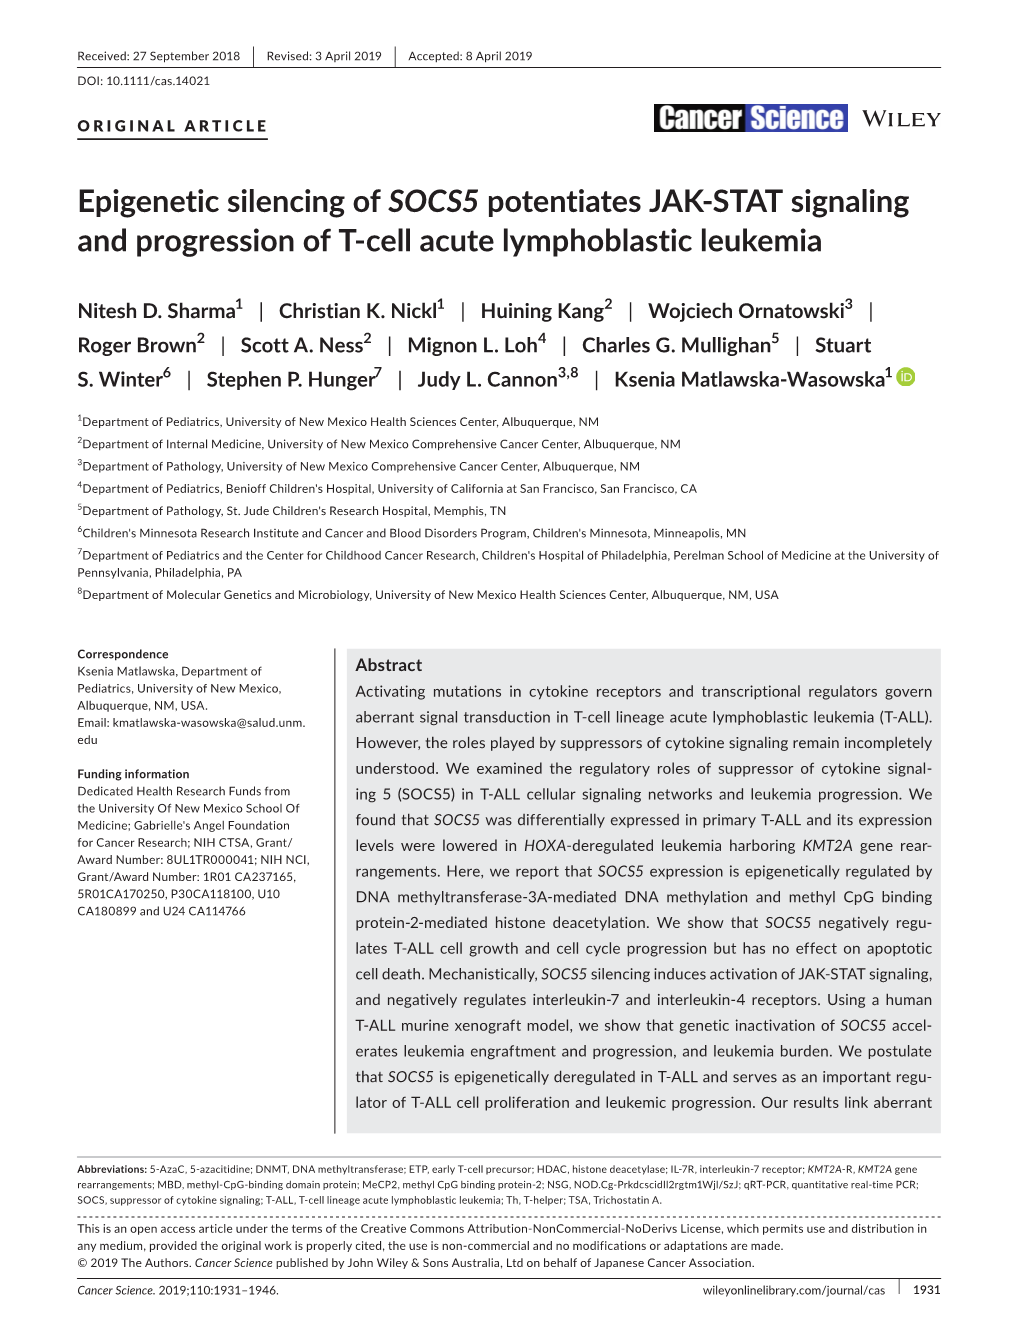 Epigenetic Silencing of SOCS5 Potentiates JAK&